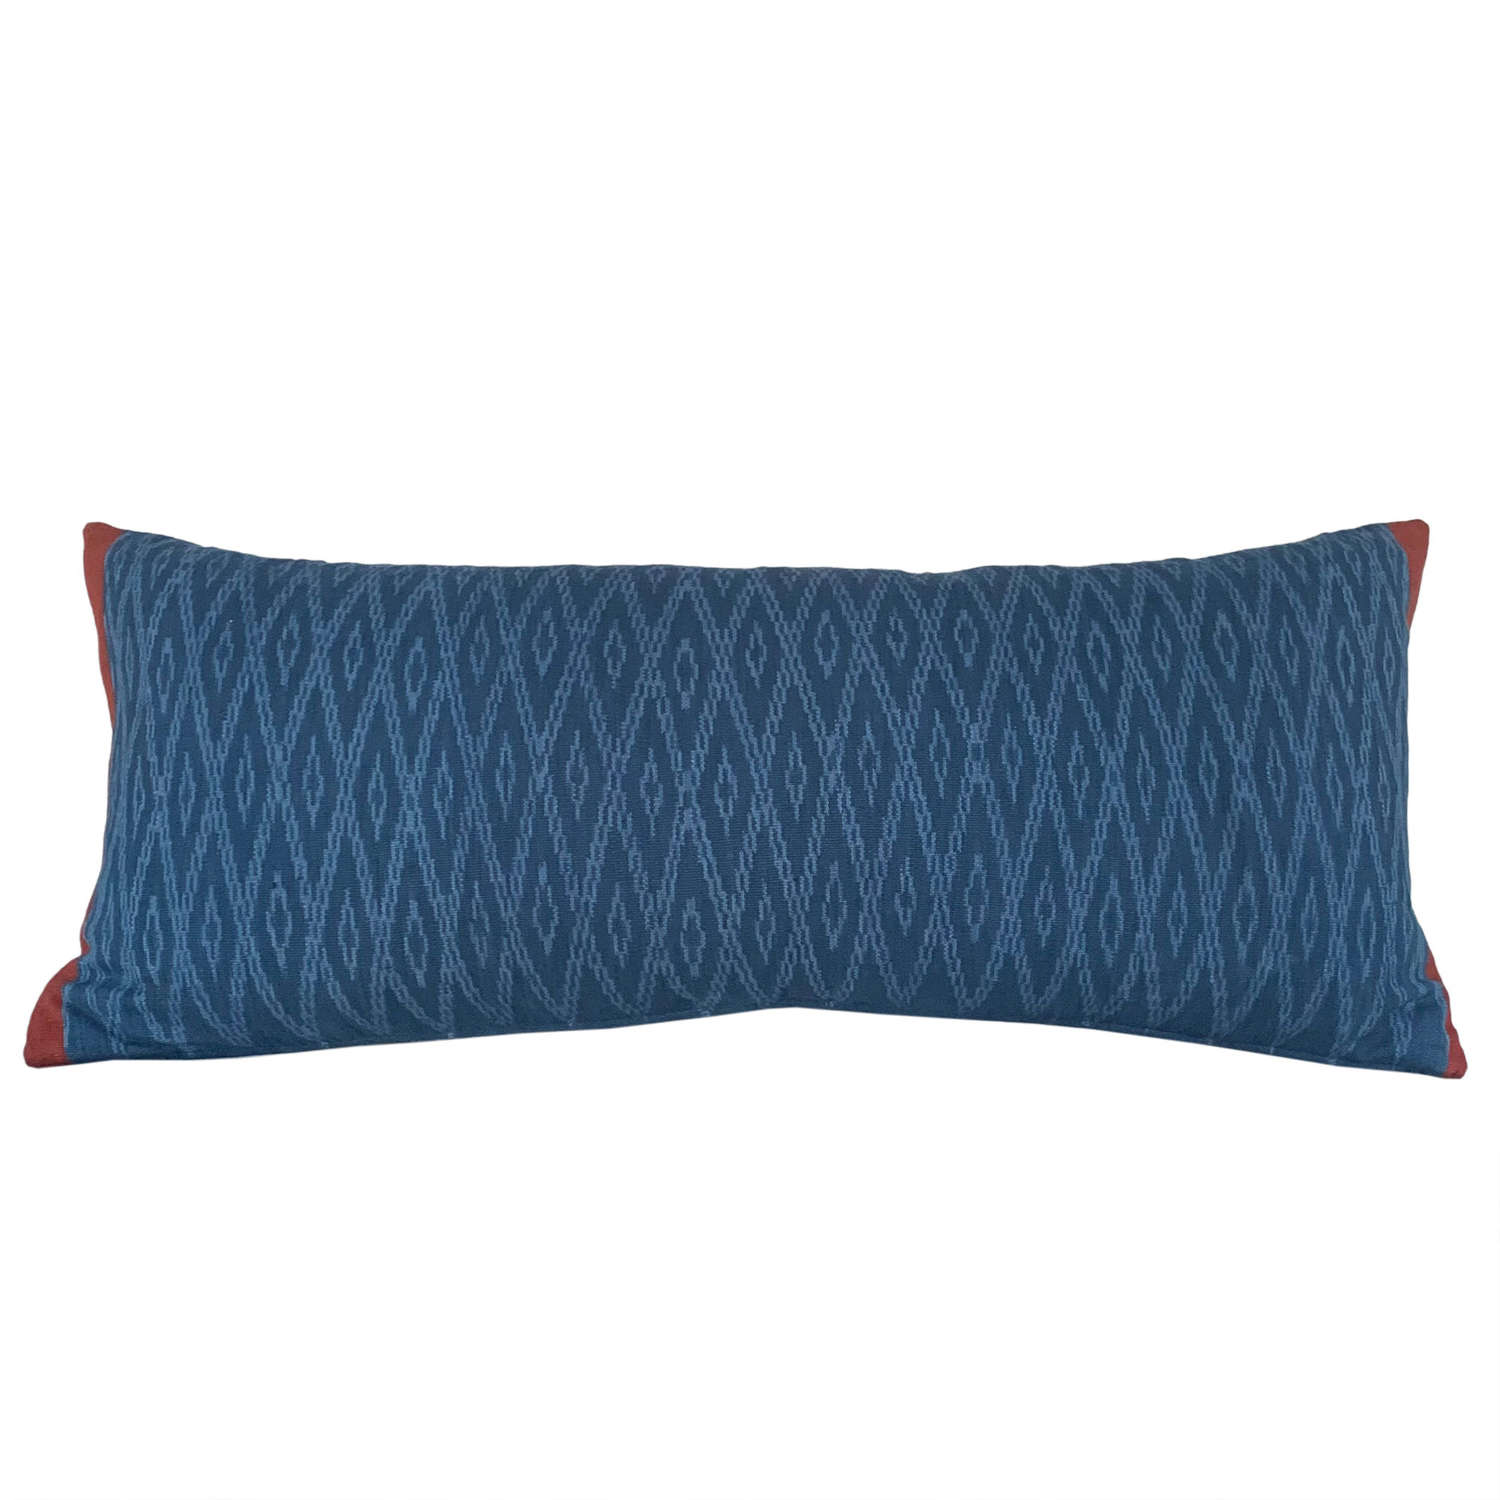 Long Indigo Batak Cushion With Tassels